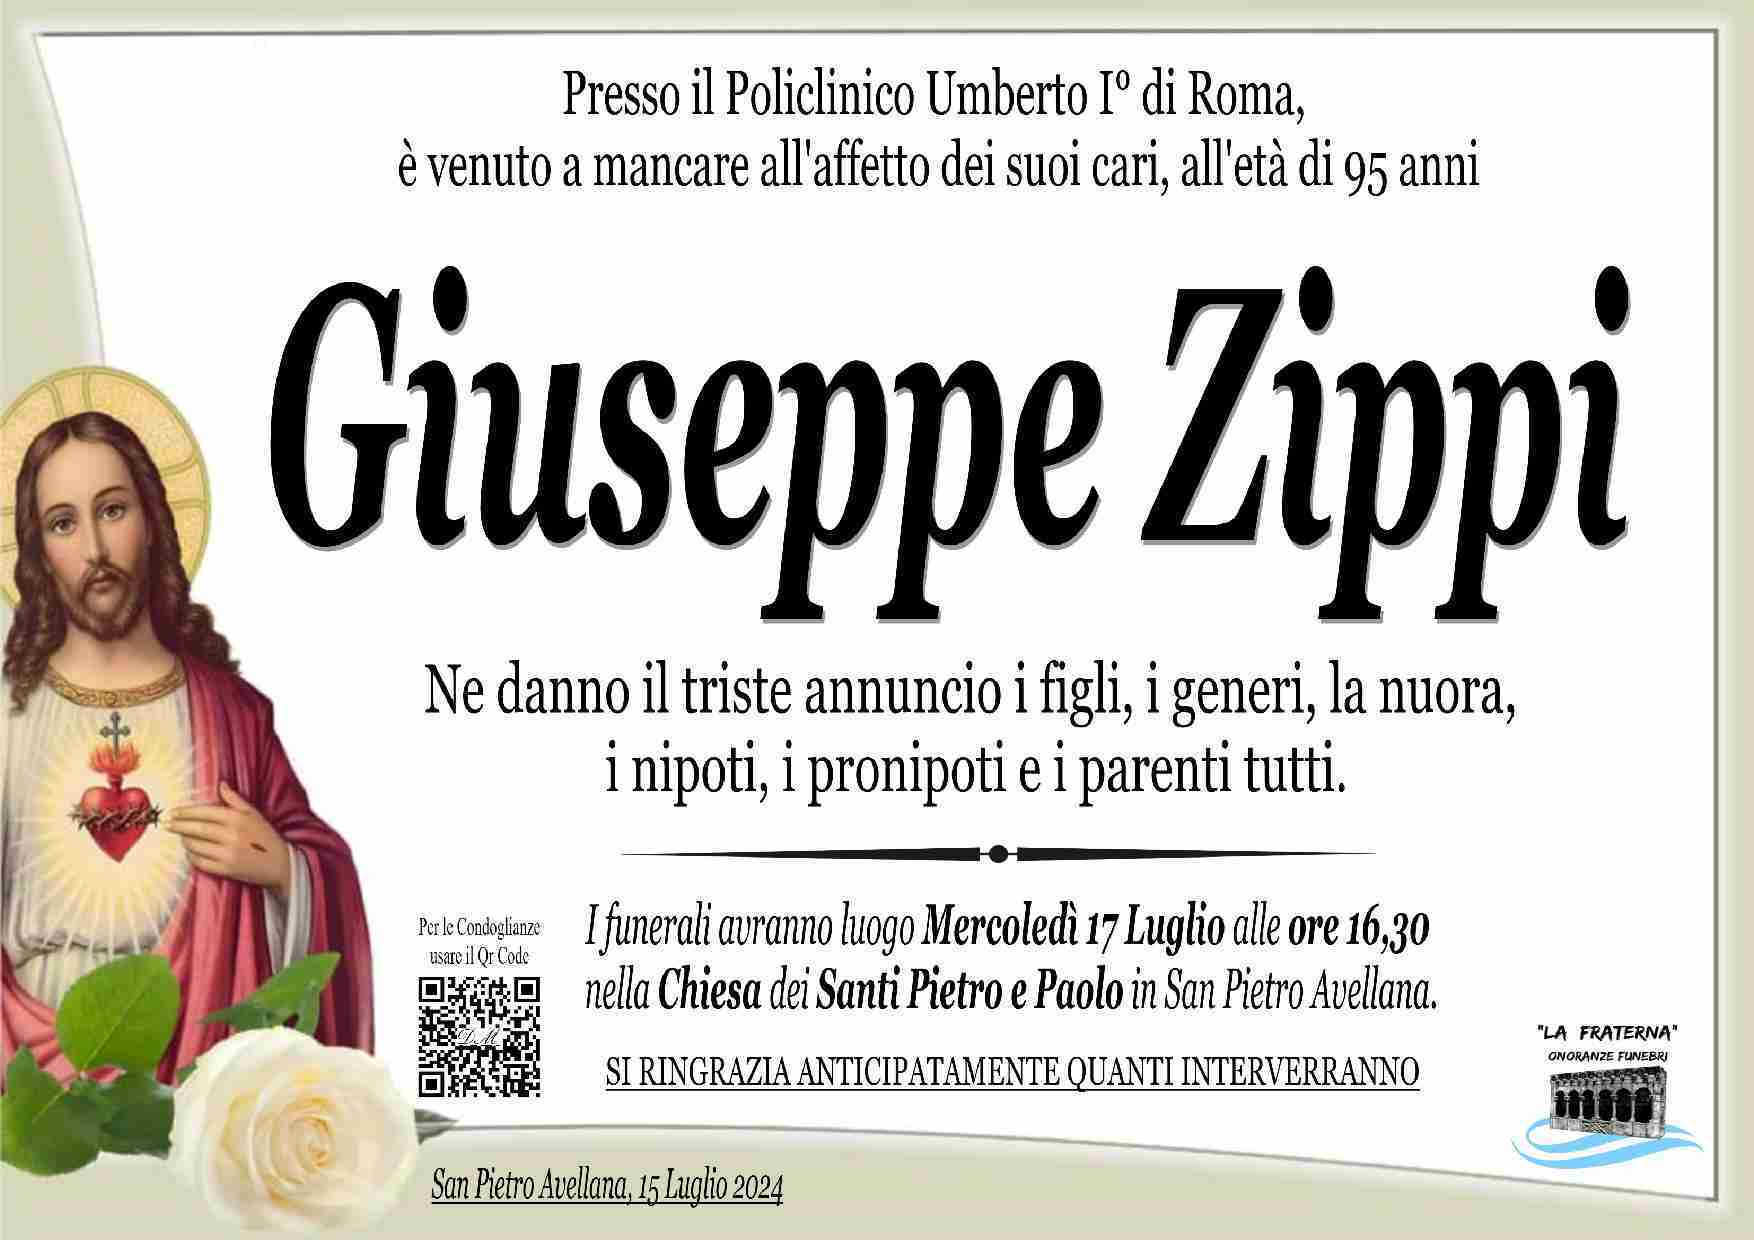 Giuseppe Zippi